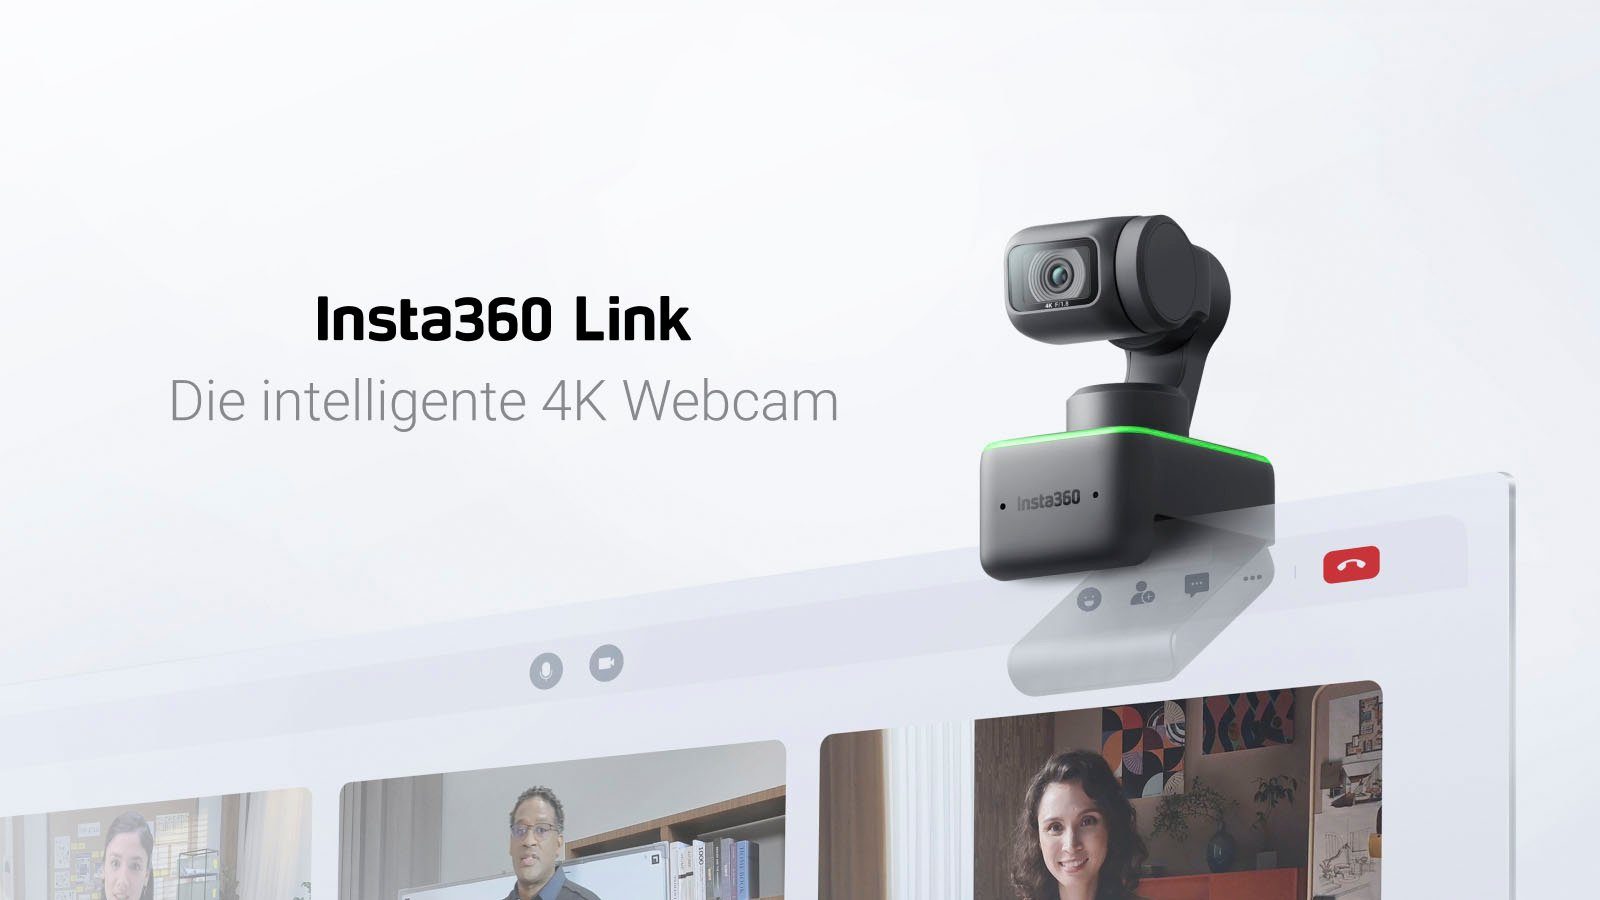 HD) Link Ultra Insta360 Webcam (4K